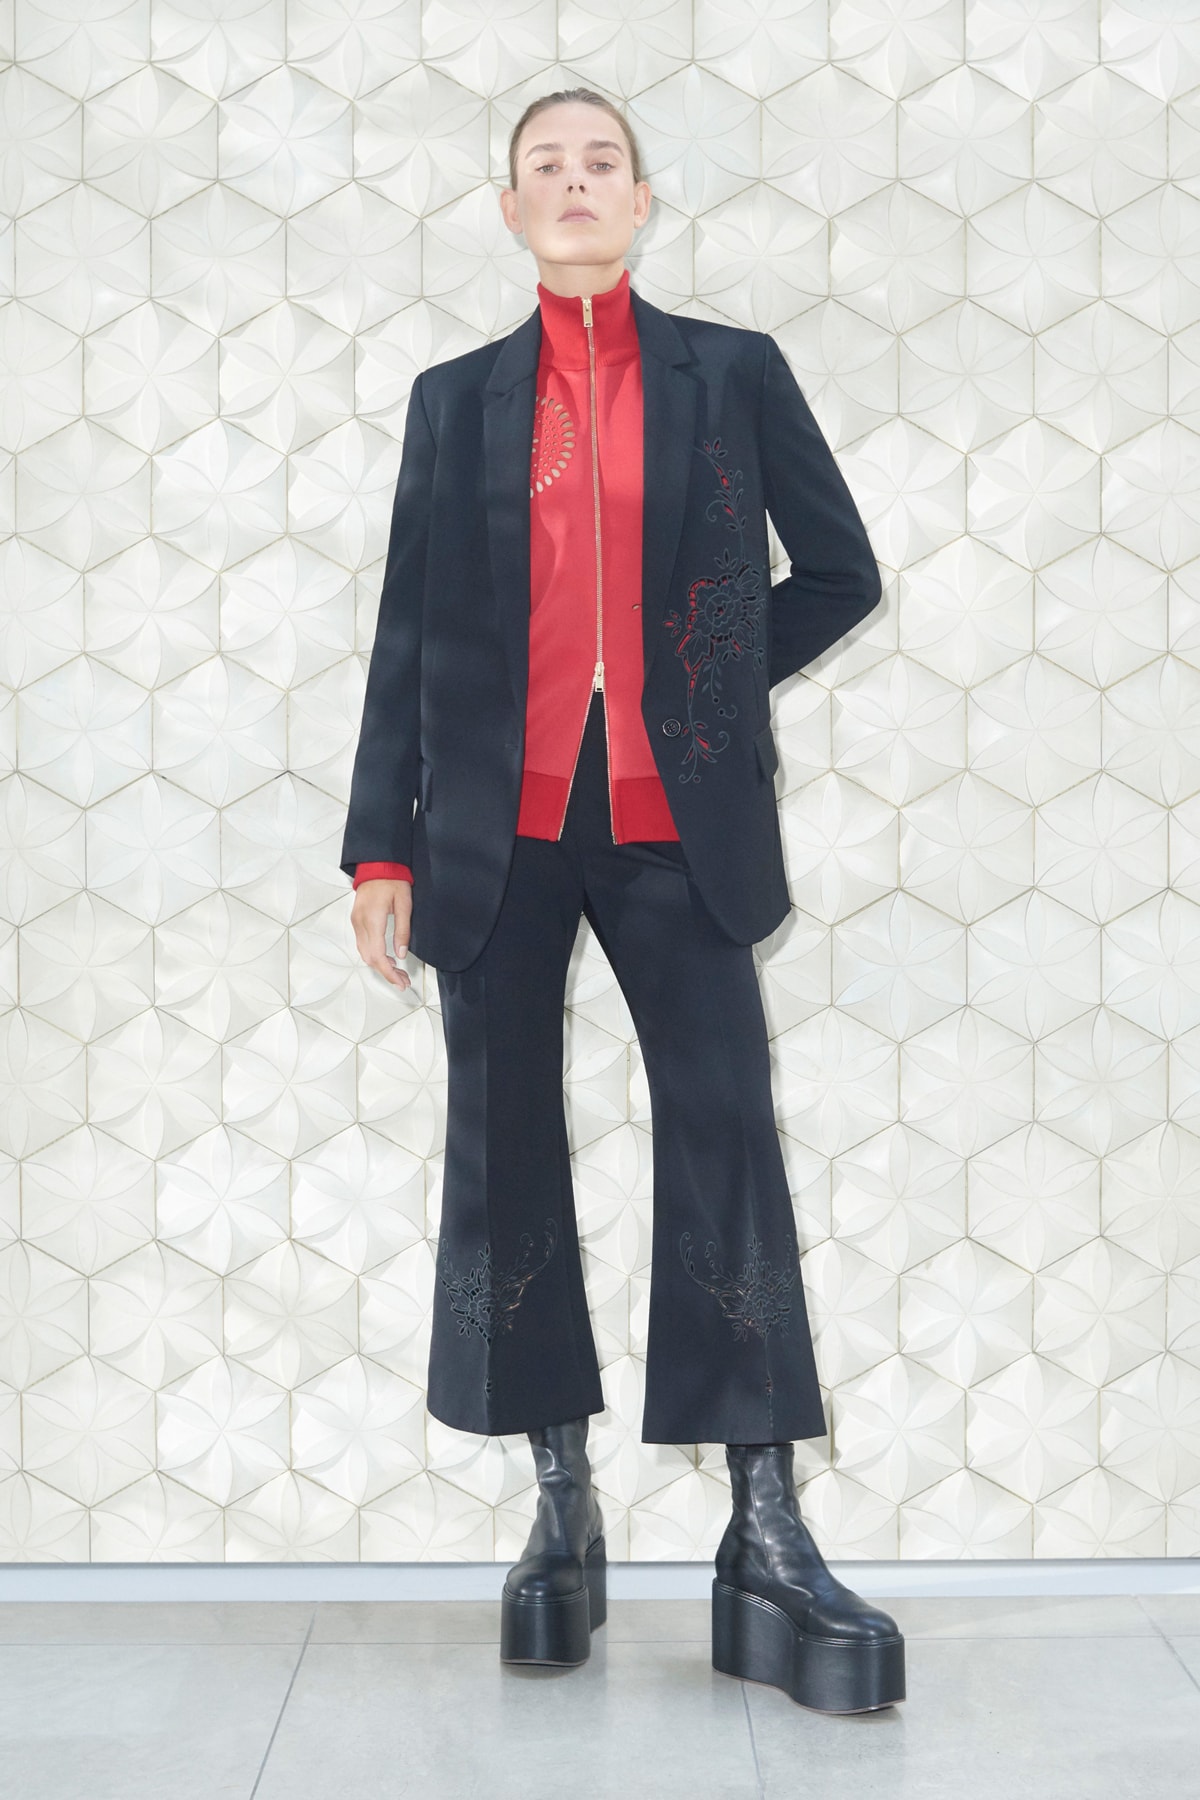 Stella McCartney Spring/Summer 2019 Collection Lookbook Blazer Cropped Trousers Platform Shoes Turtleneck Top Black Red